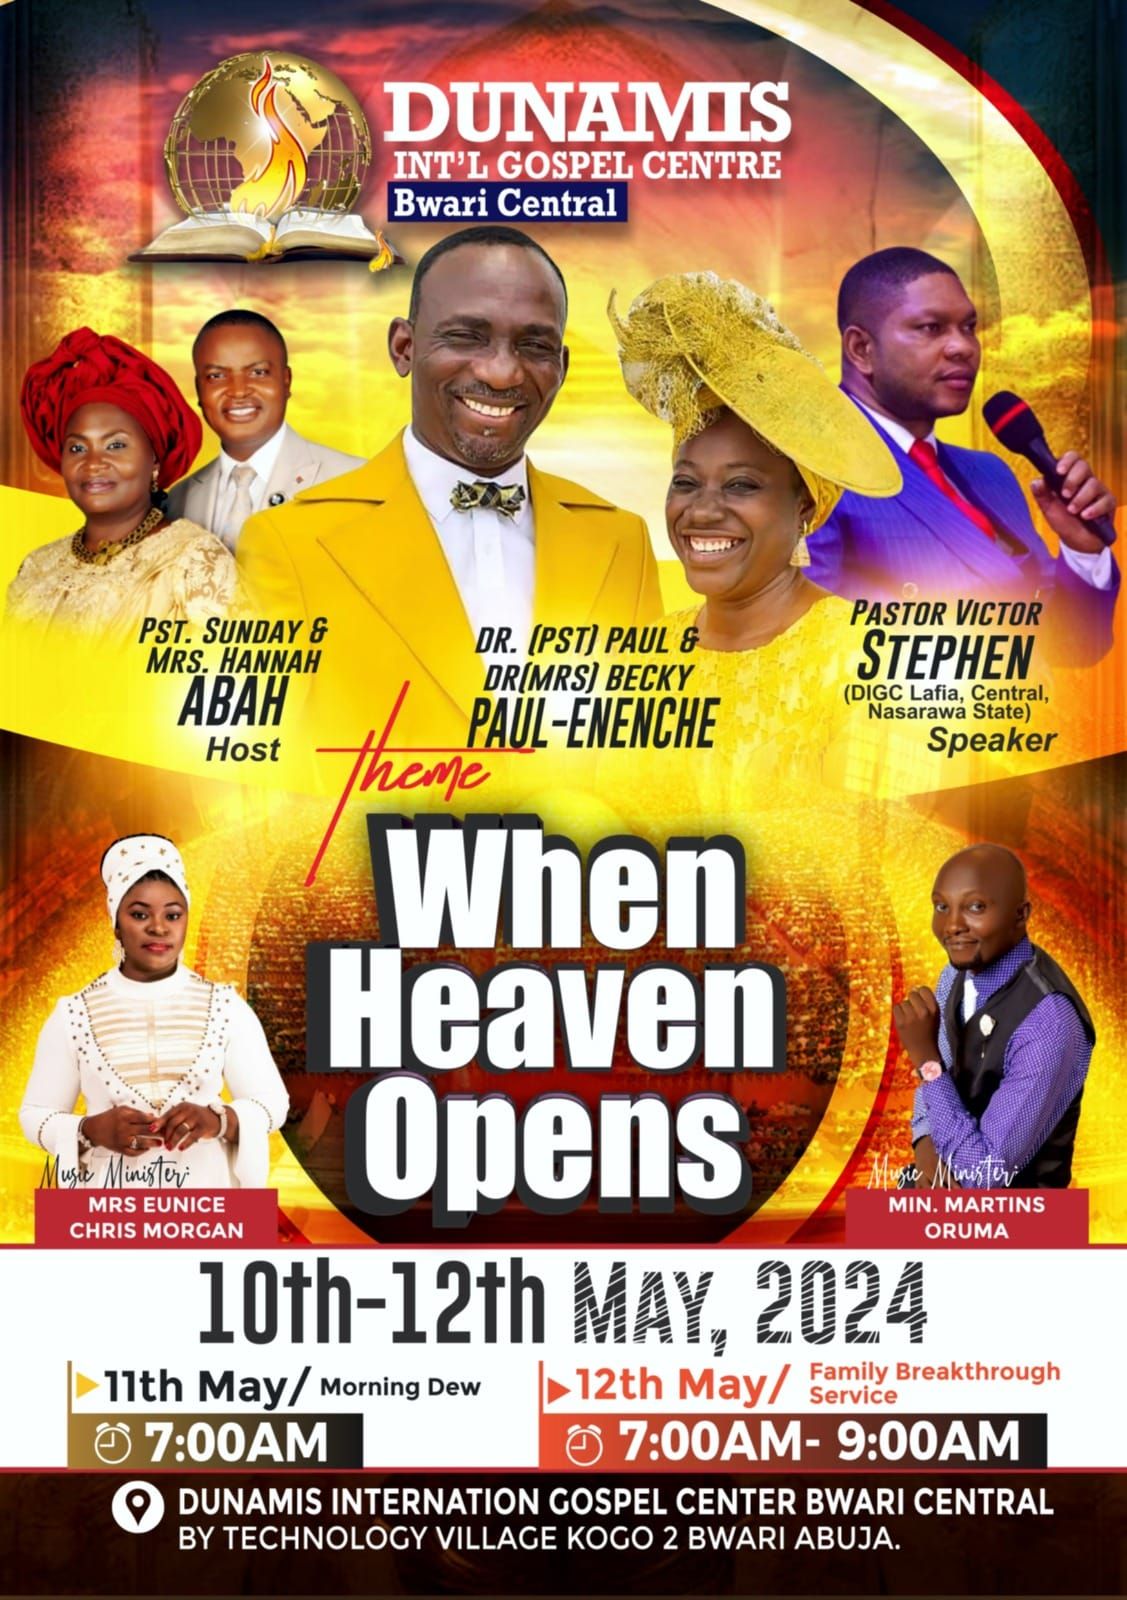 Dunamis International Gospel Centre Bwari Central,FCT Abuja Nigeria. Present "When Heaven Opens" 